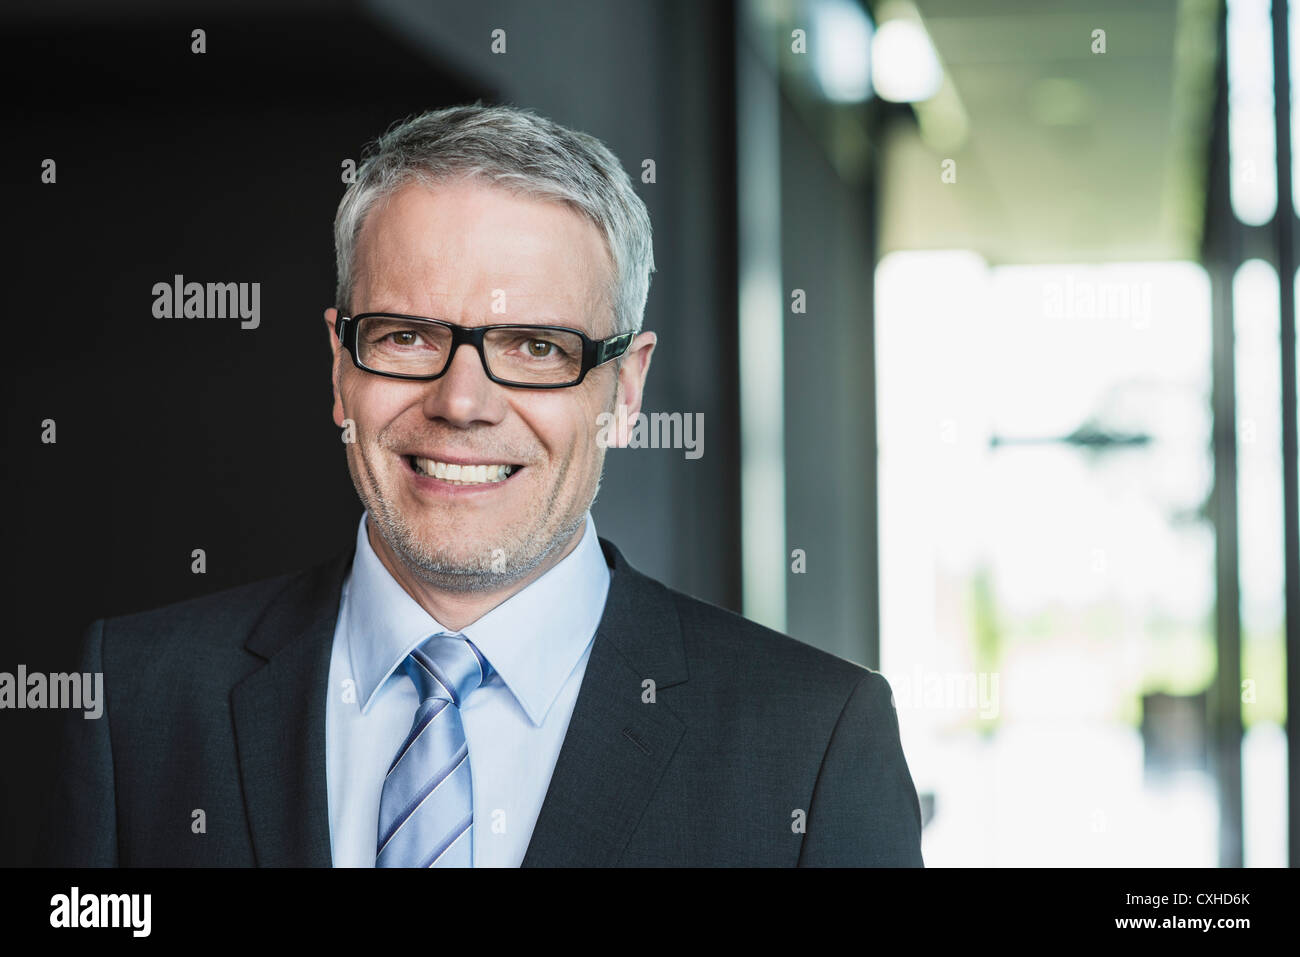 Germany, Stuttgart, Businessman standing in office building, smiling Stock Photo